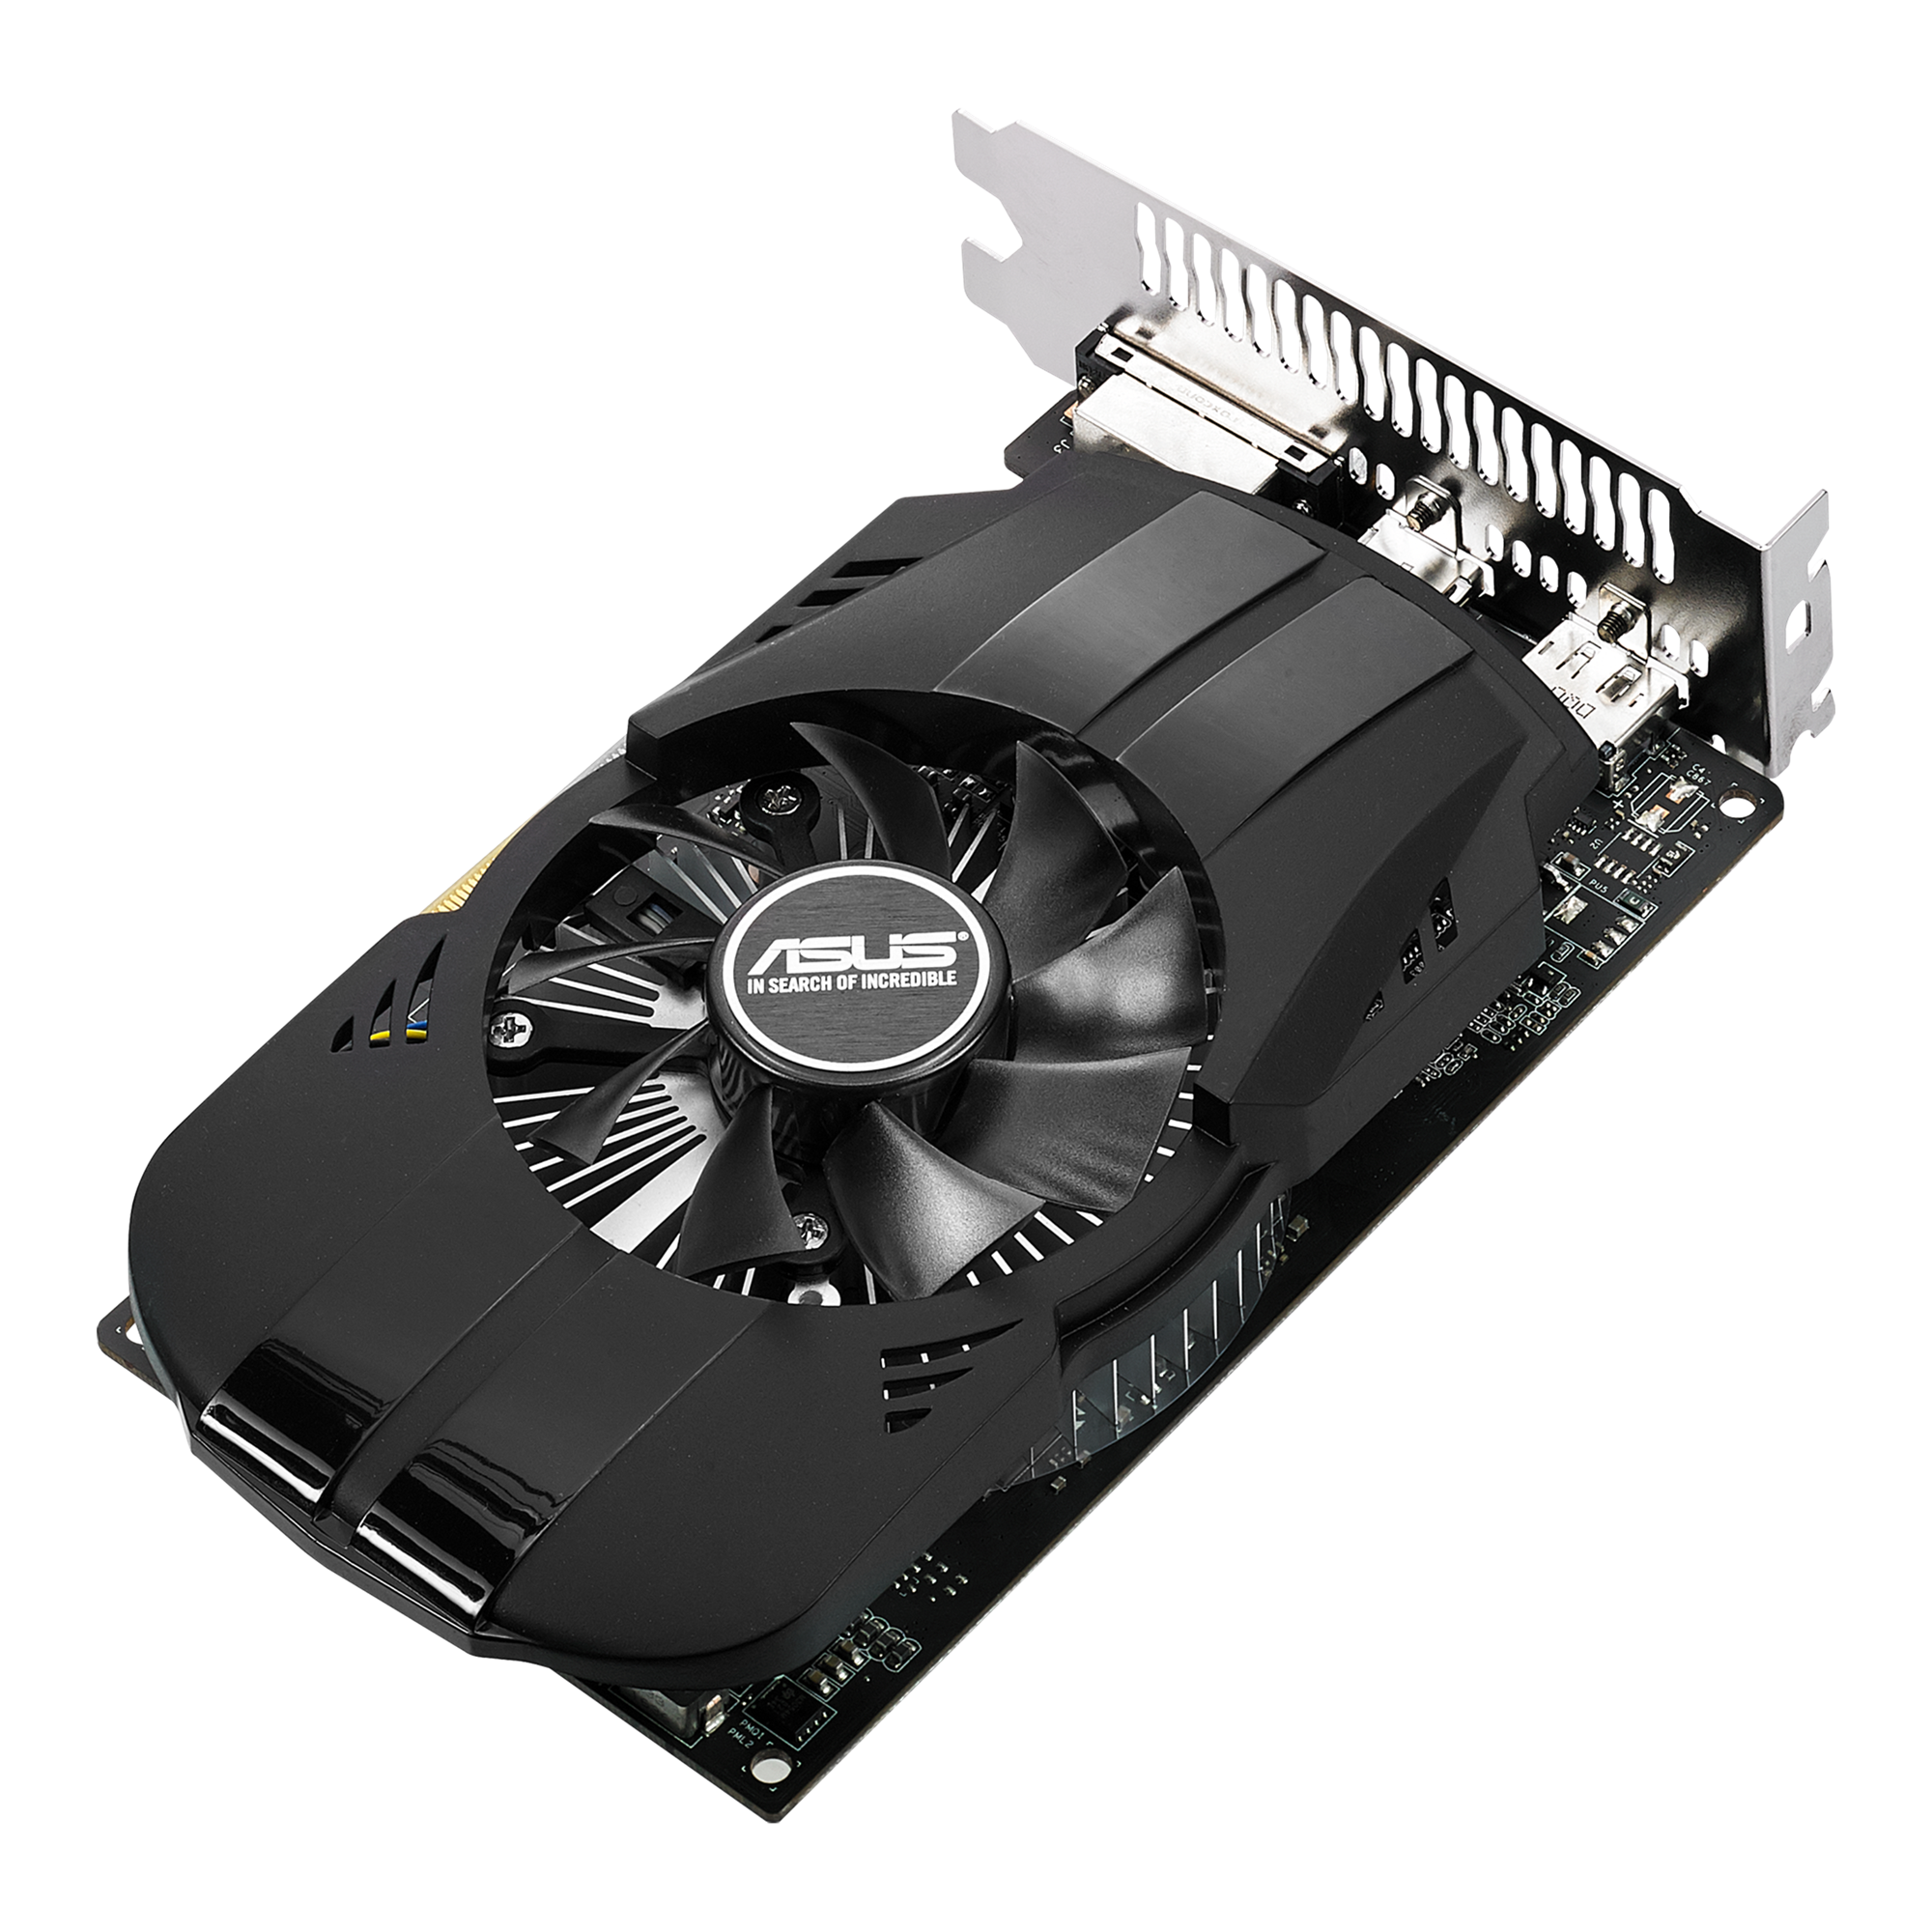 ASUS NVIDIA GeForce PH-GTX1050TI-4G